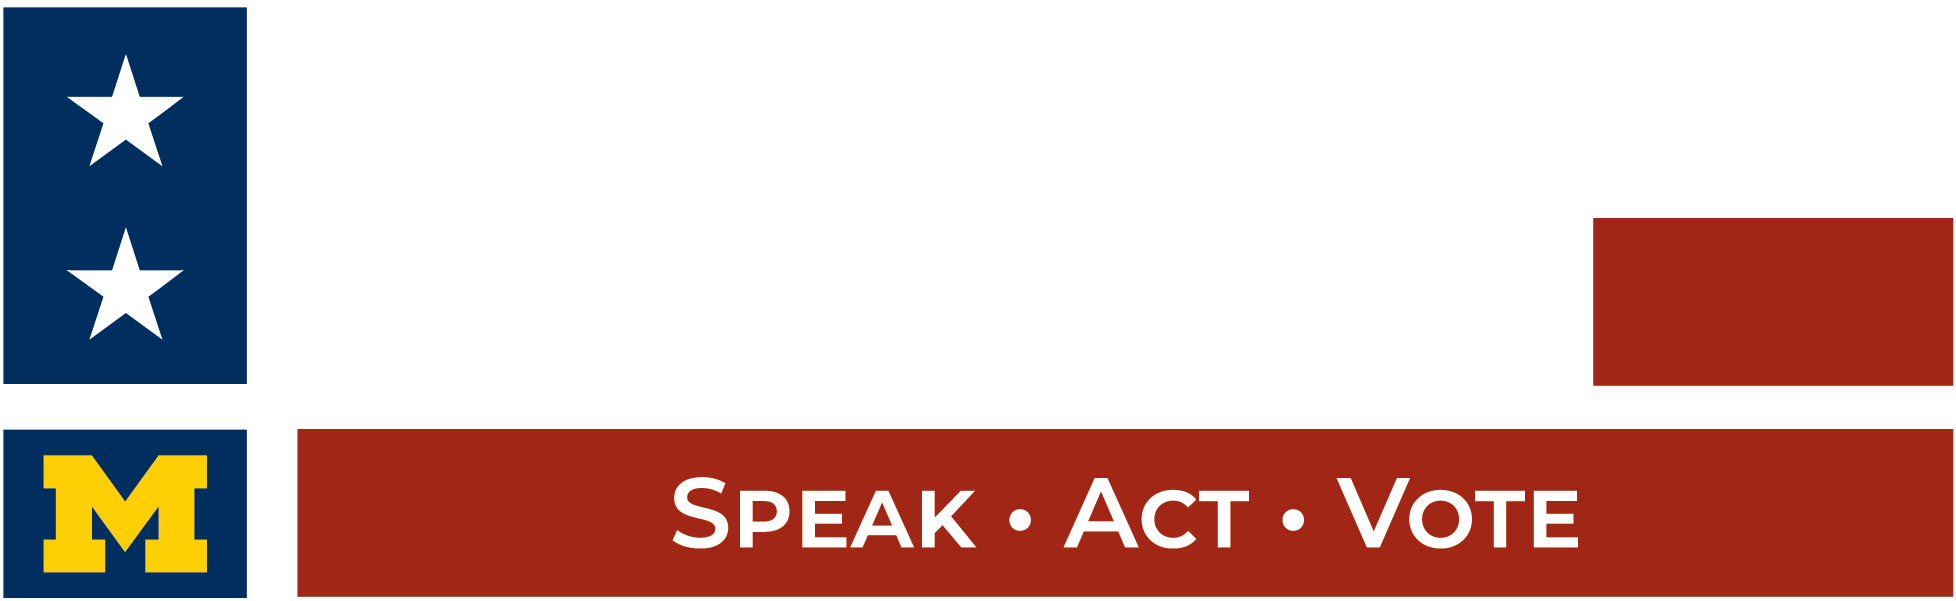 Democracy and Debate logo